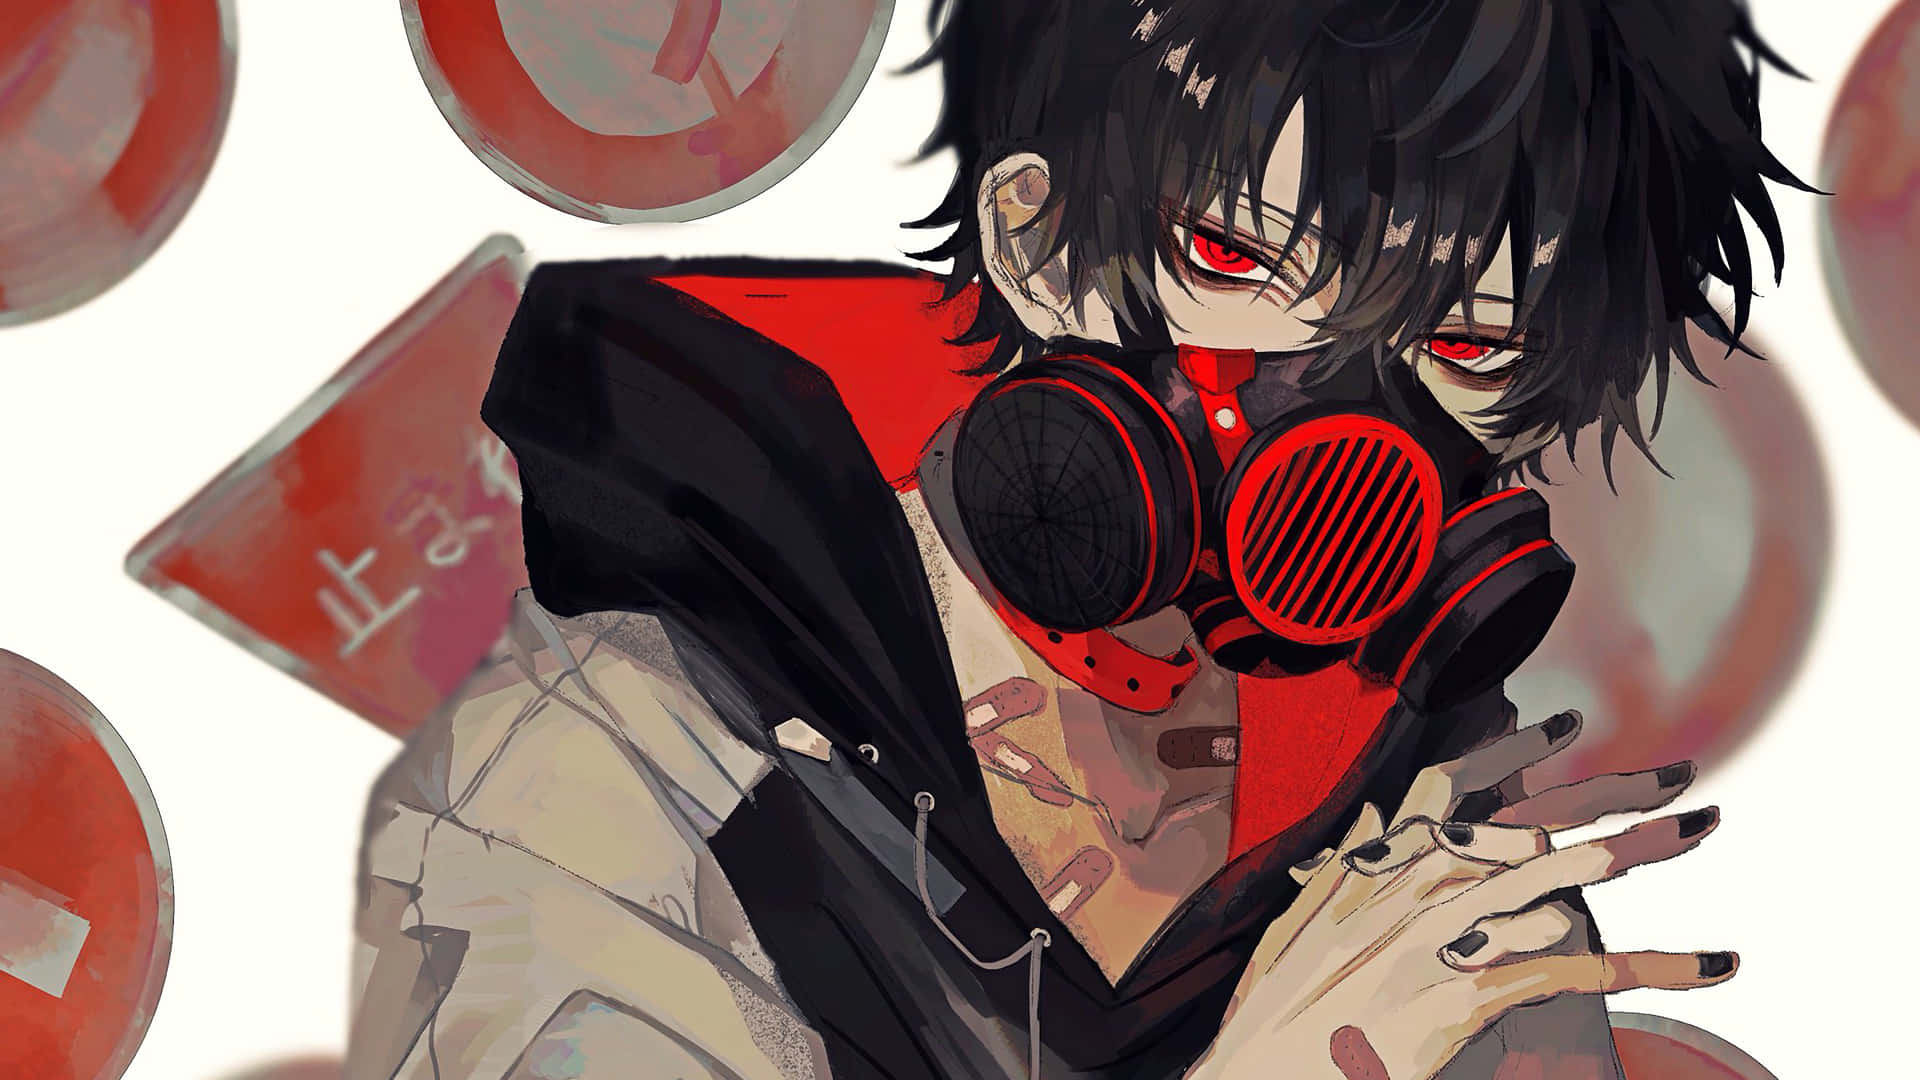 Hot Gas Mask Boy Anime Red & Black